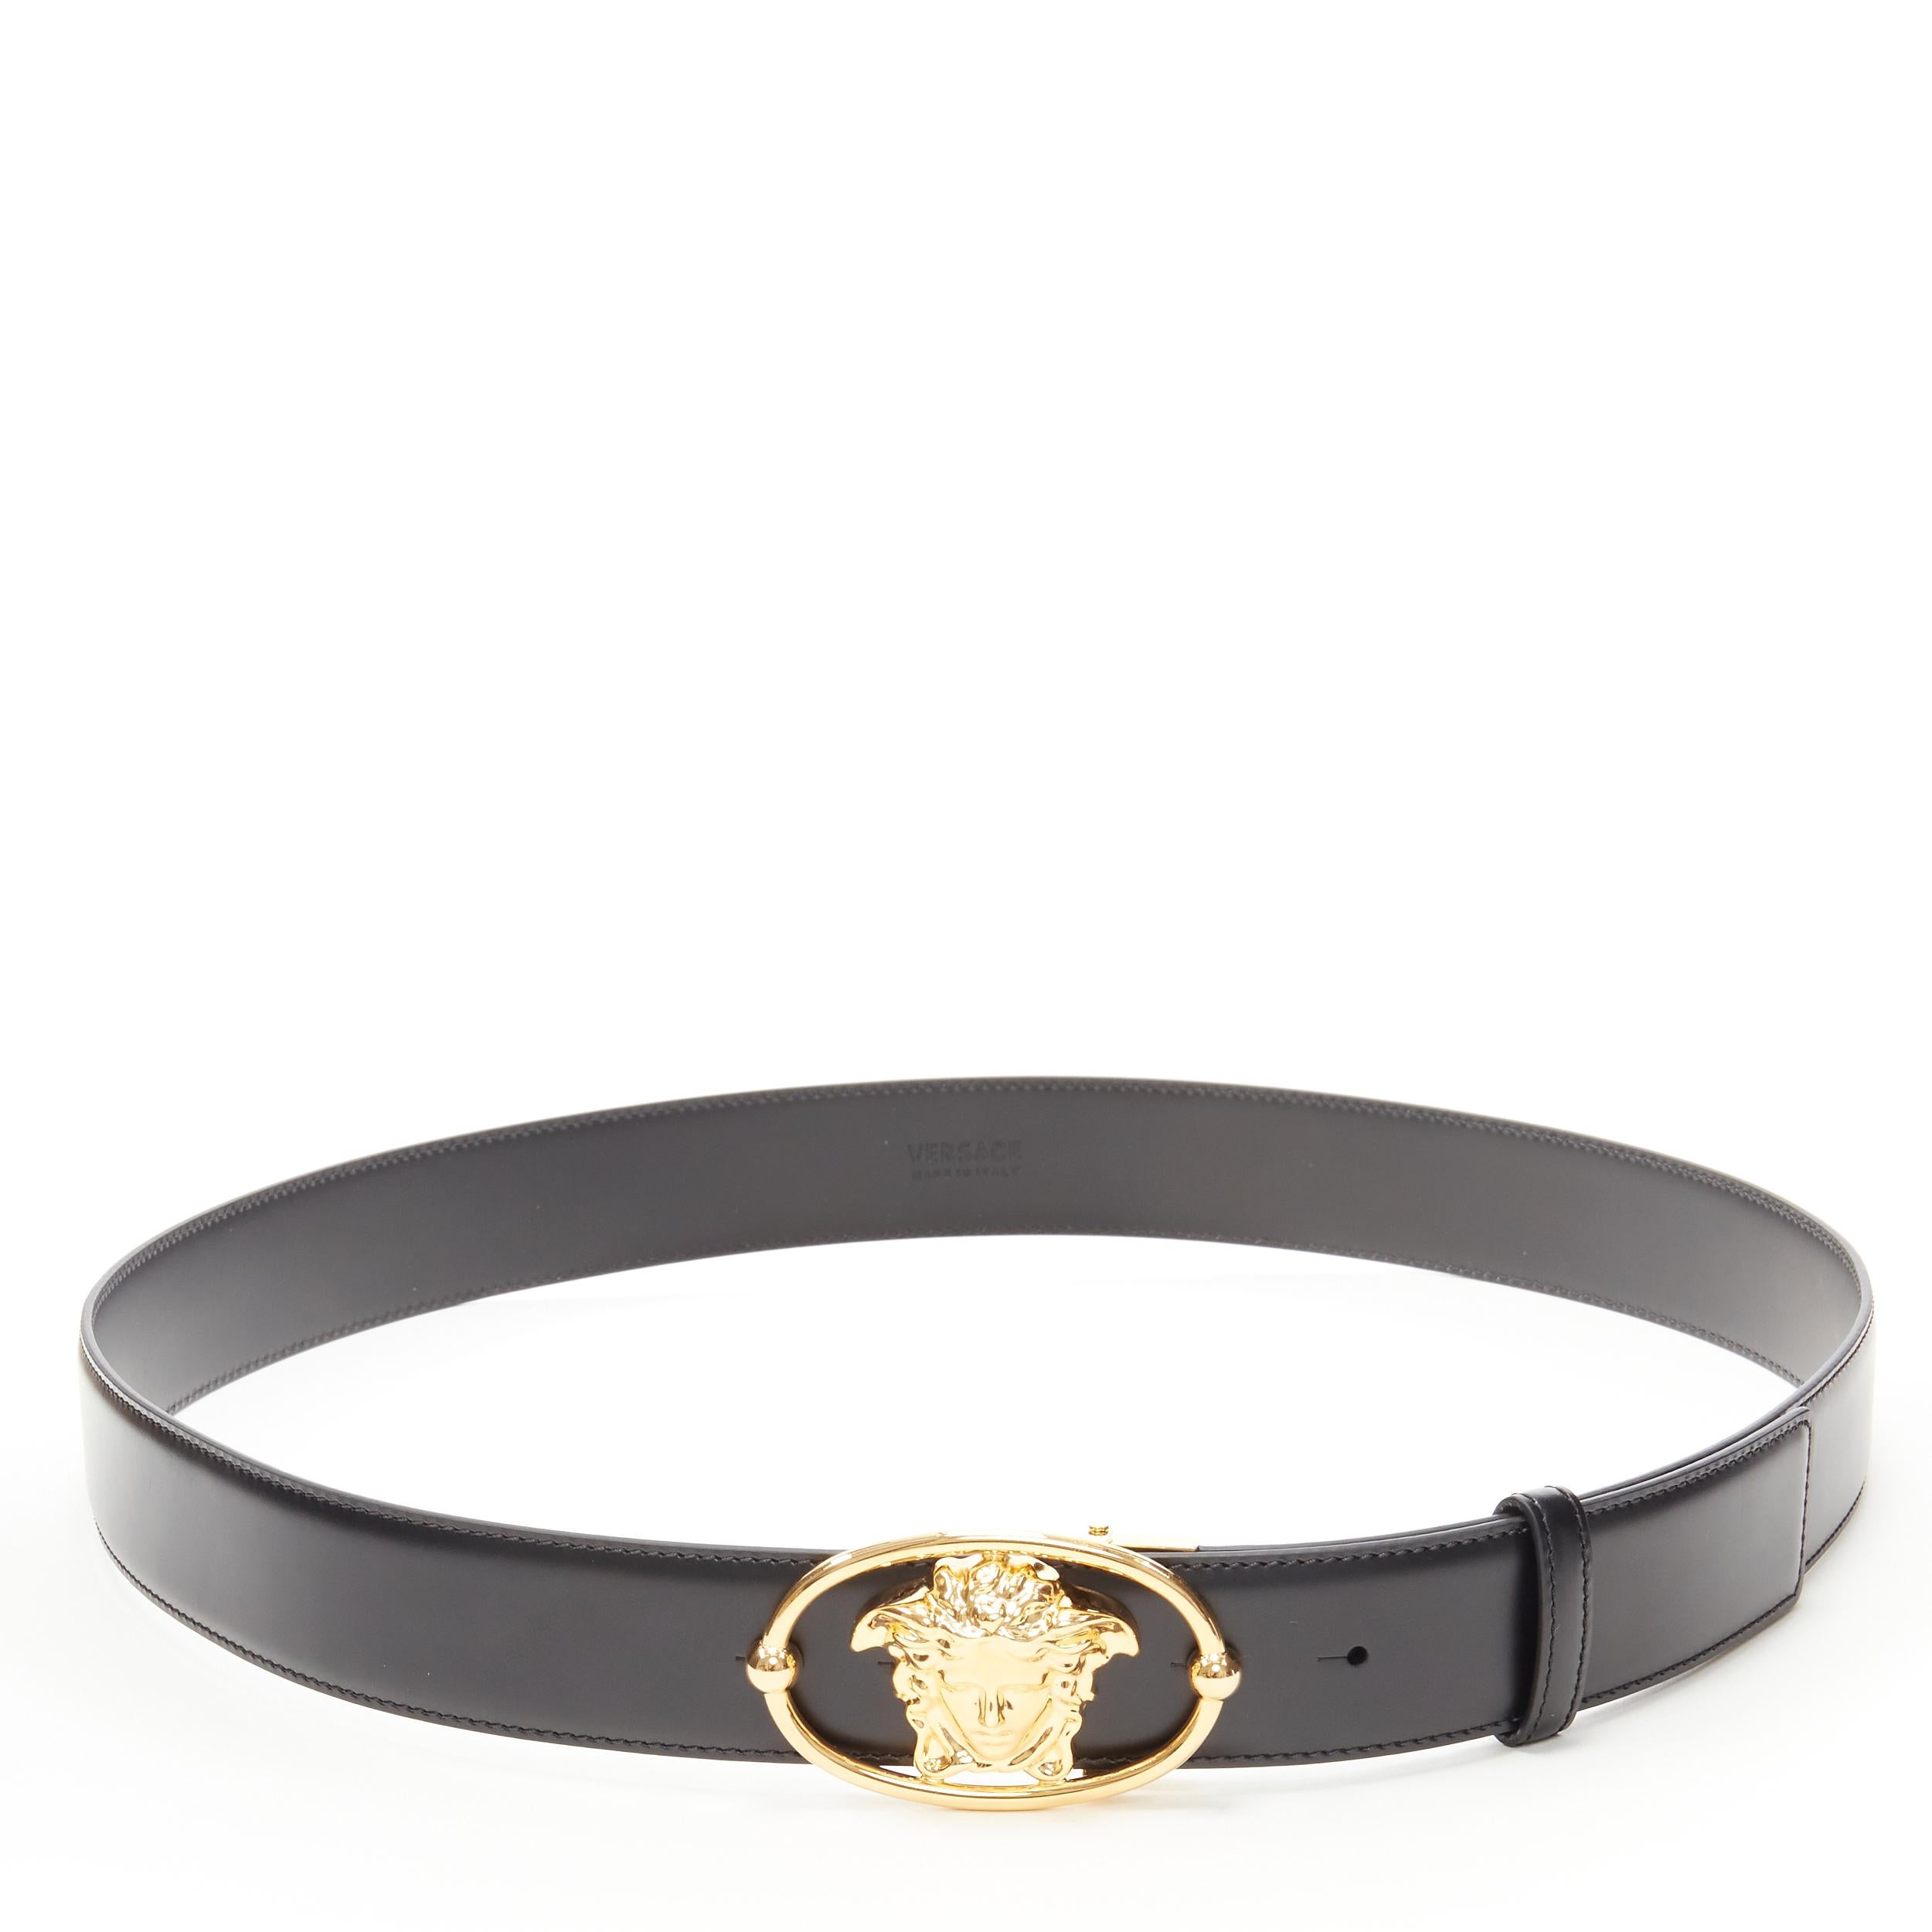 Noir new VERSACE La Medusa Insignia gold oval 3D buckle black leather belt 115cm 46